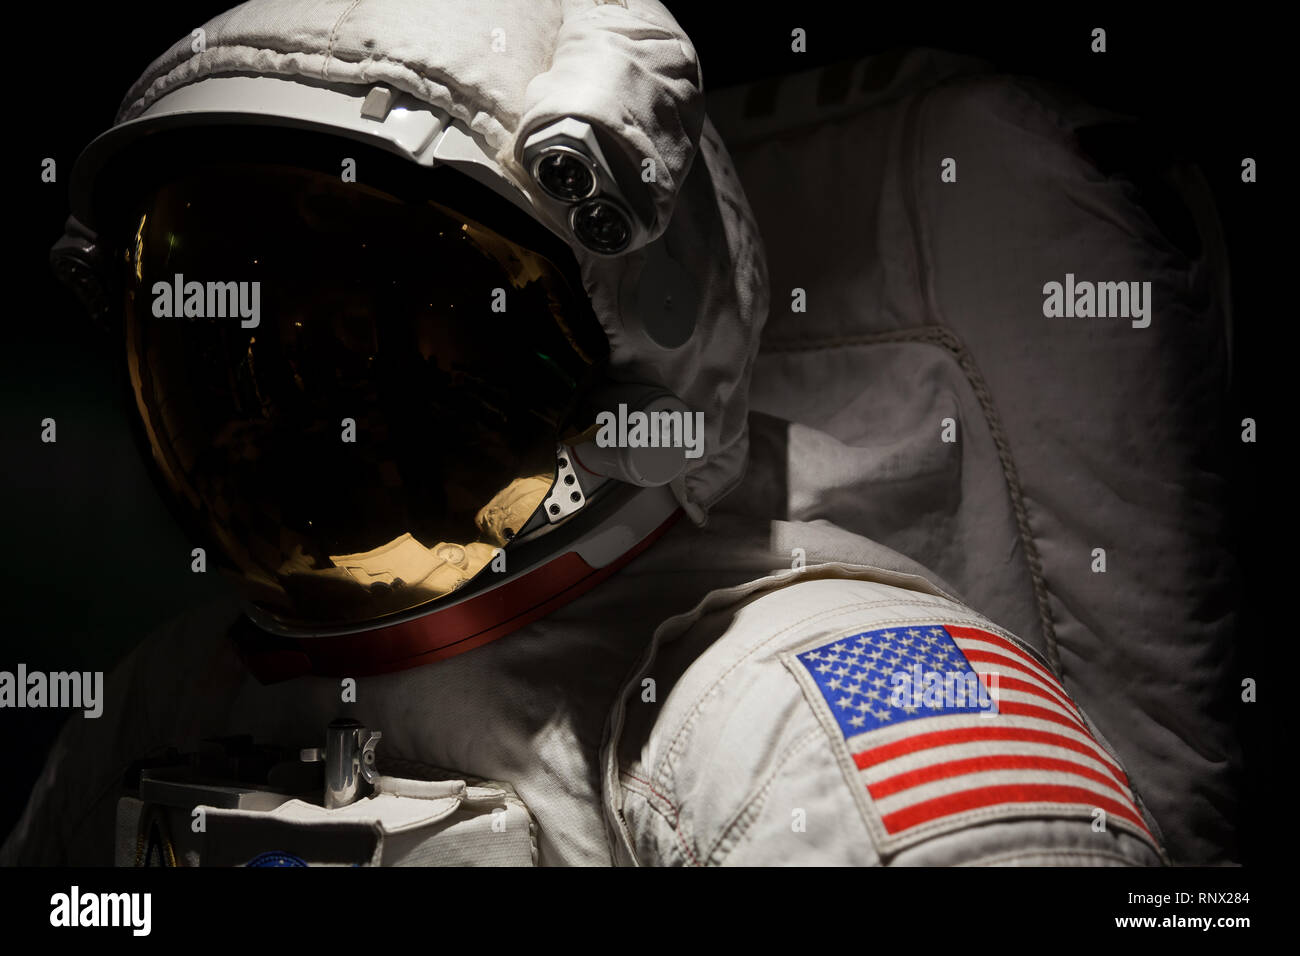 NASA astronaut space suit Stock Photo